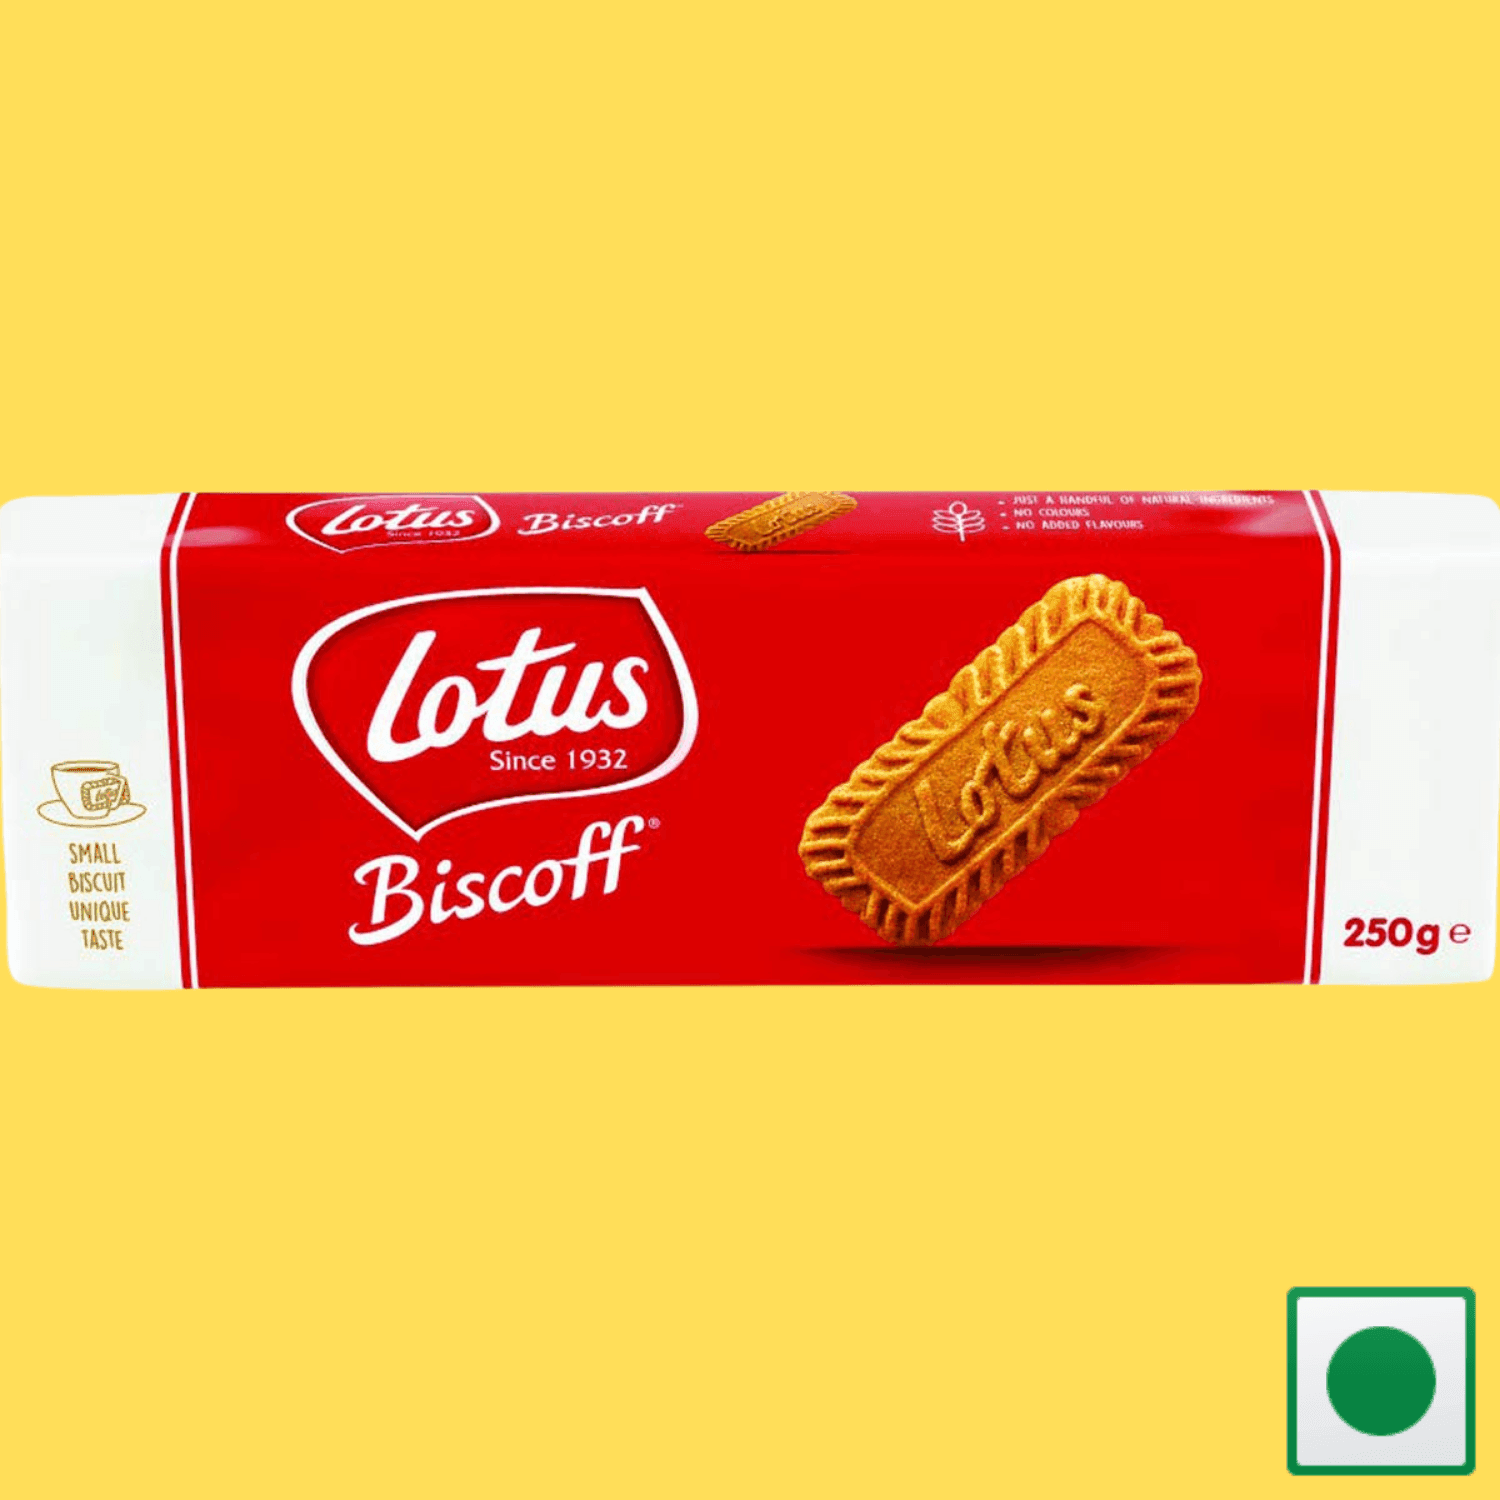 Lotus Biscoff Original Biscuits 250g(Imported) - Super 7 Mart